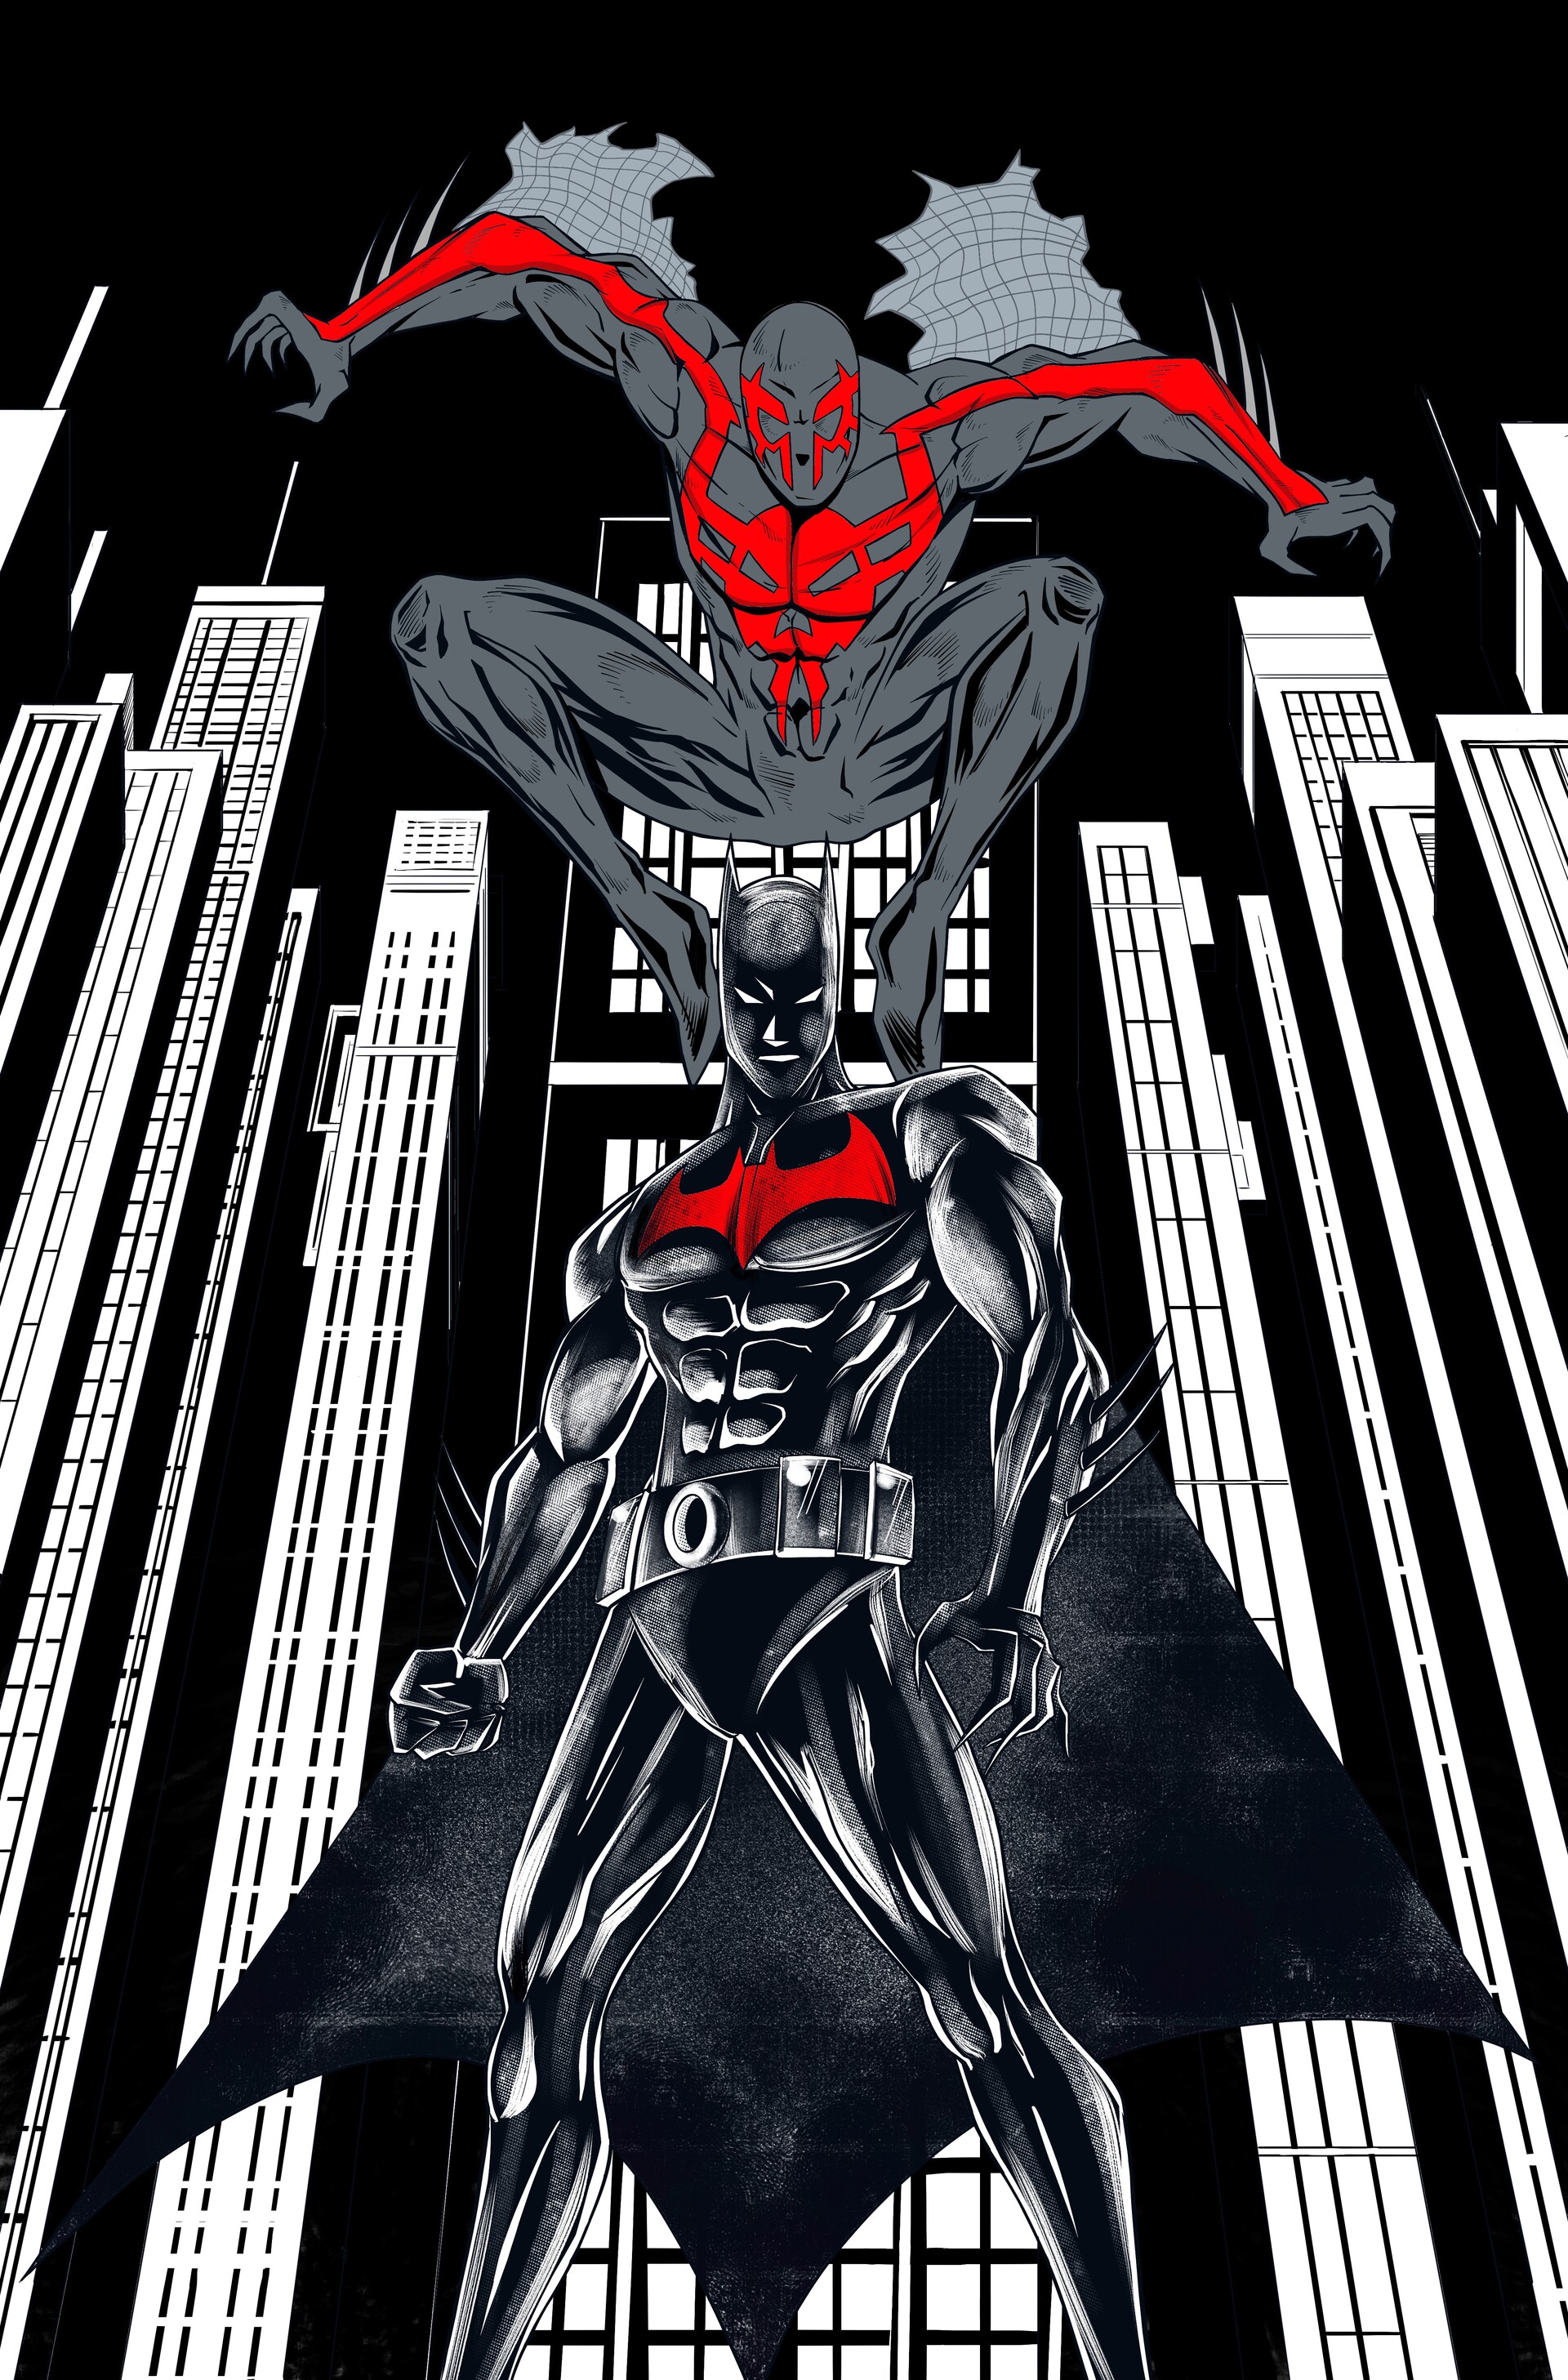 iPhone Wallpaper - Batman Beyond  Batman wallpaper, Batman comic wallpaper,  Batman beyond